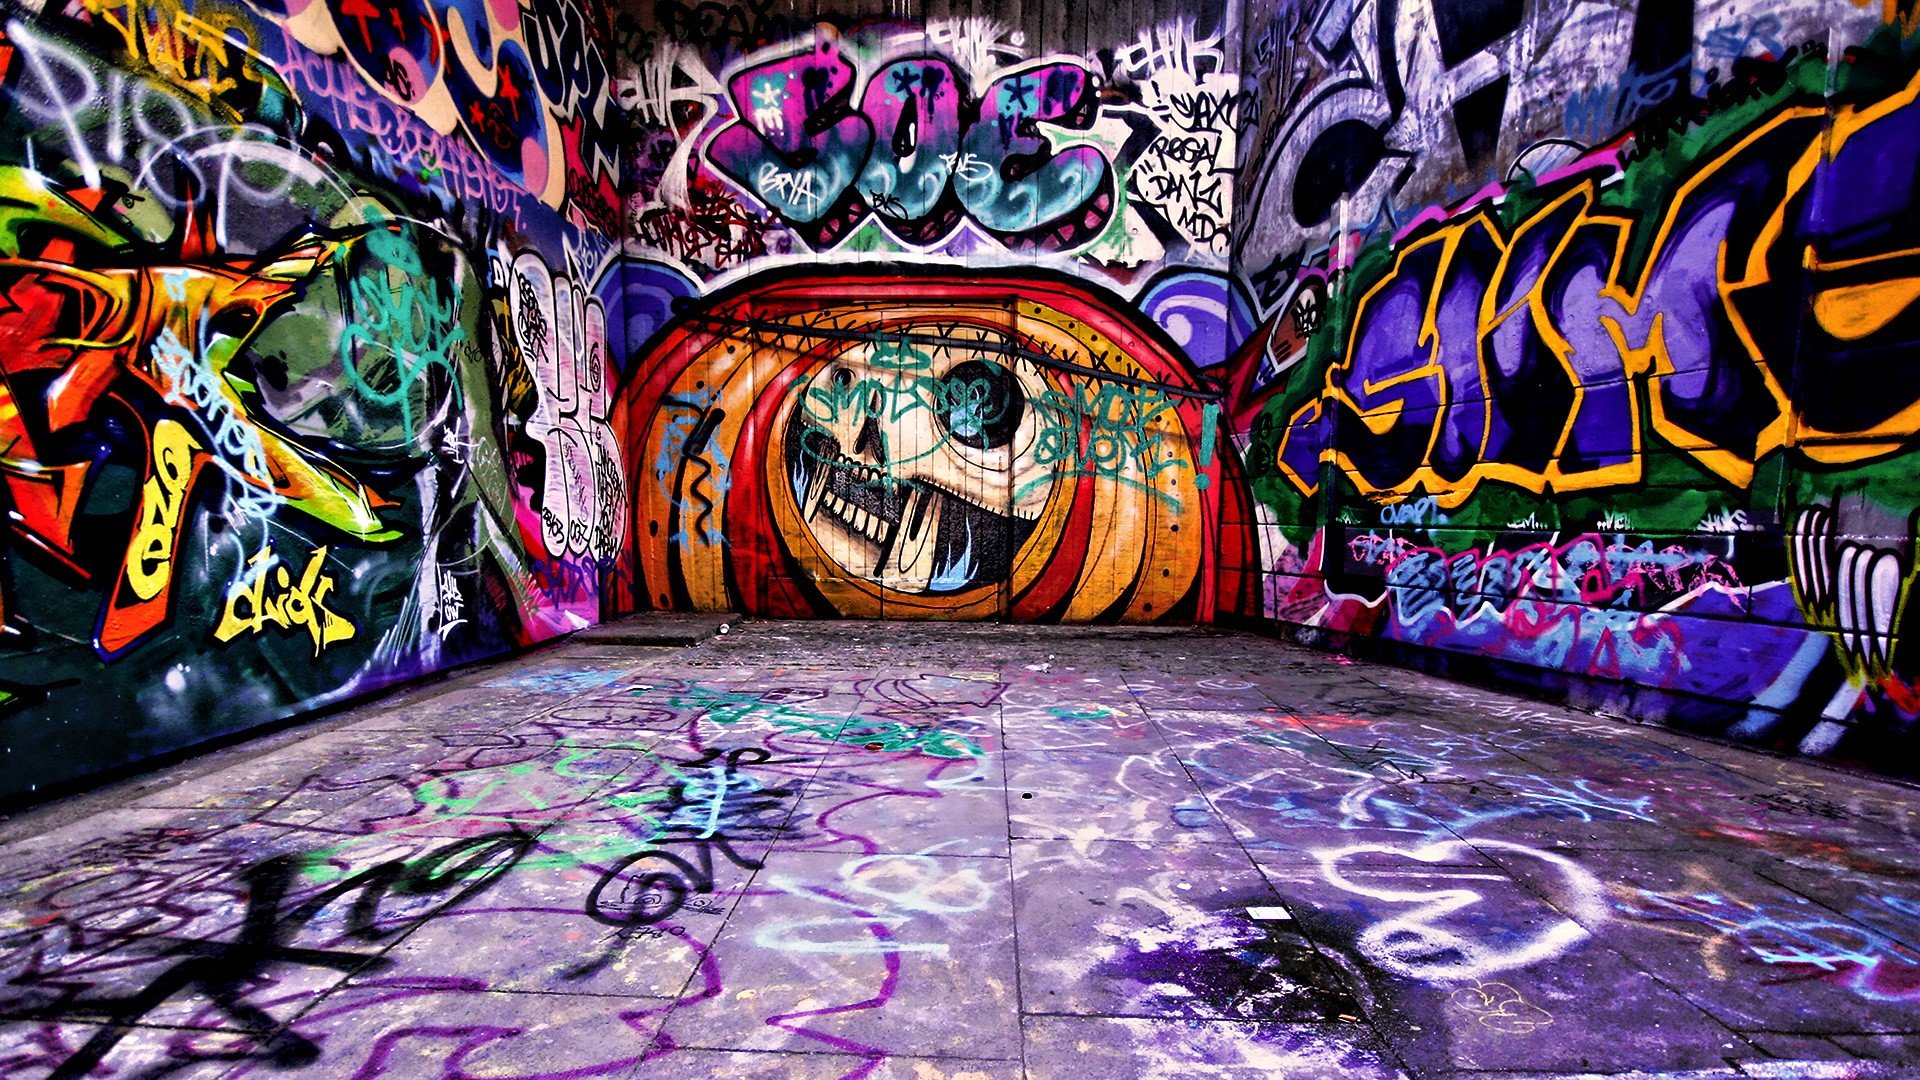 graffiti rapper child wallpaper other dead wallpapers